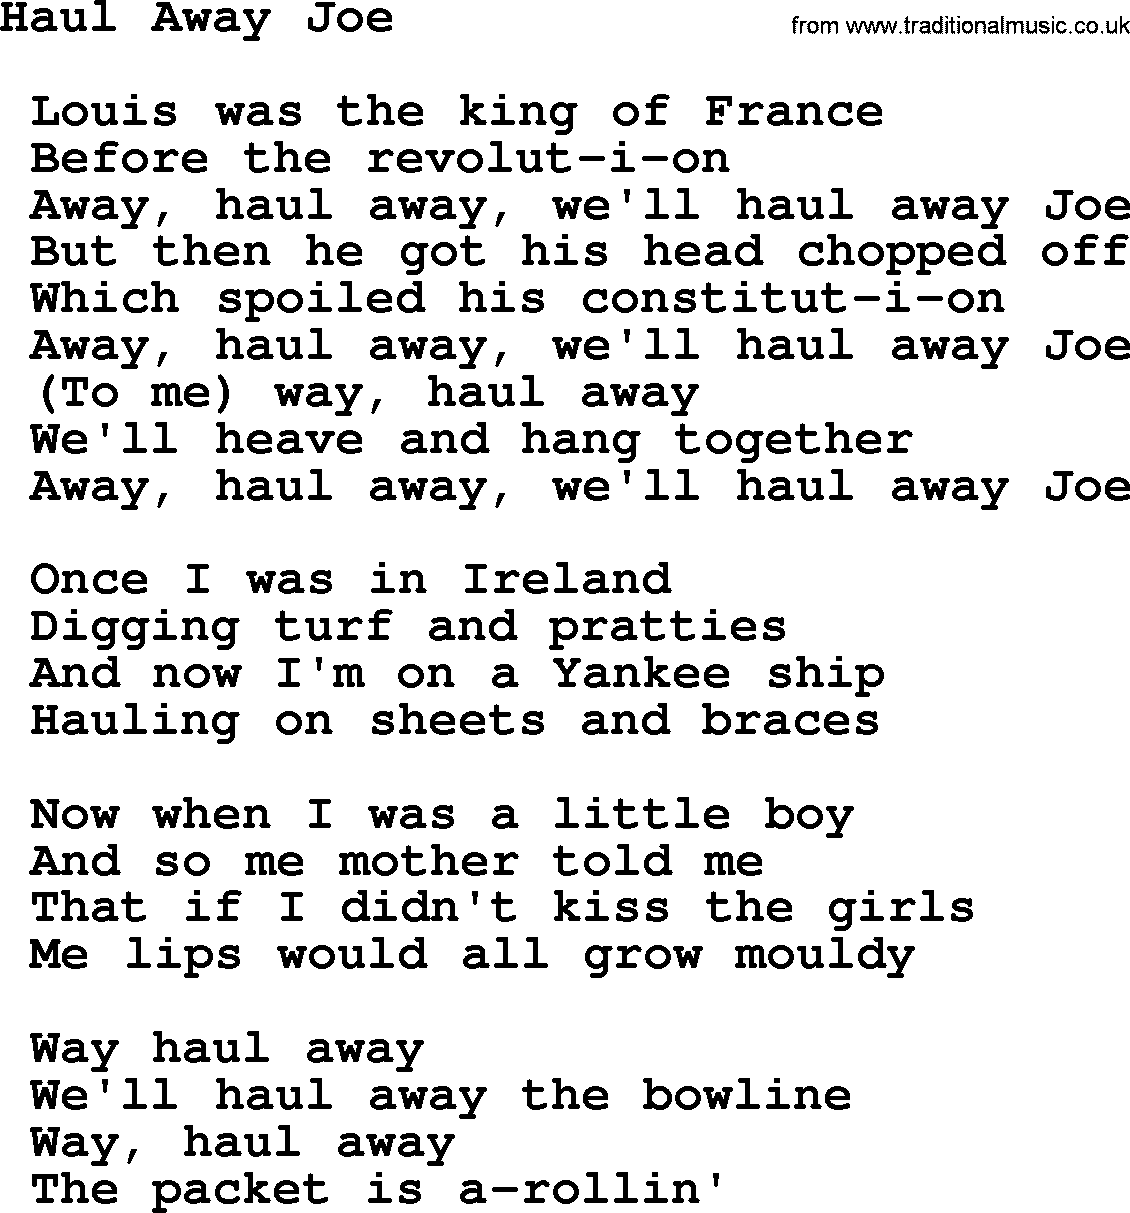 Sea Song or Shantie: Haul Away Joe, lyrics